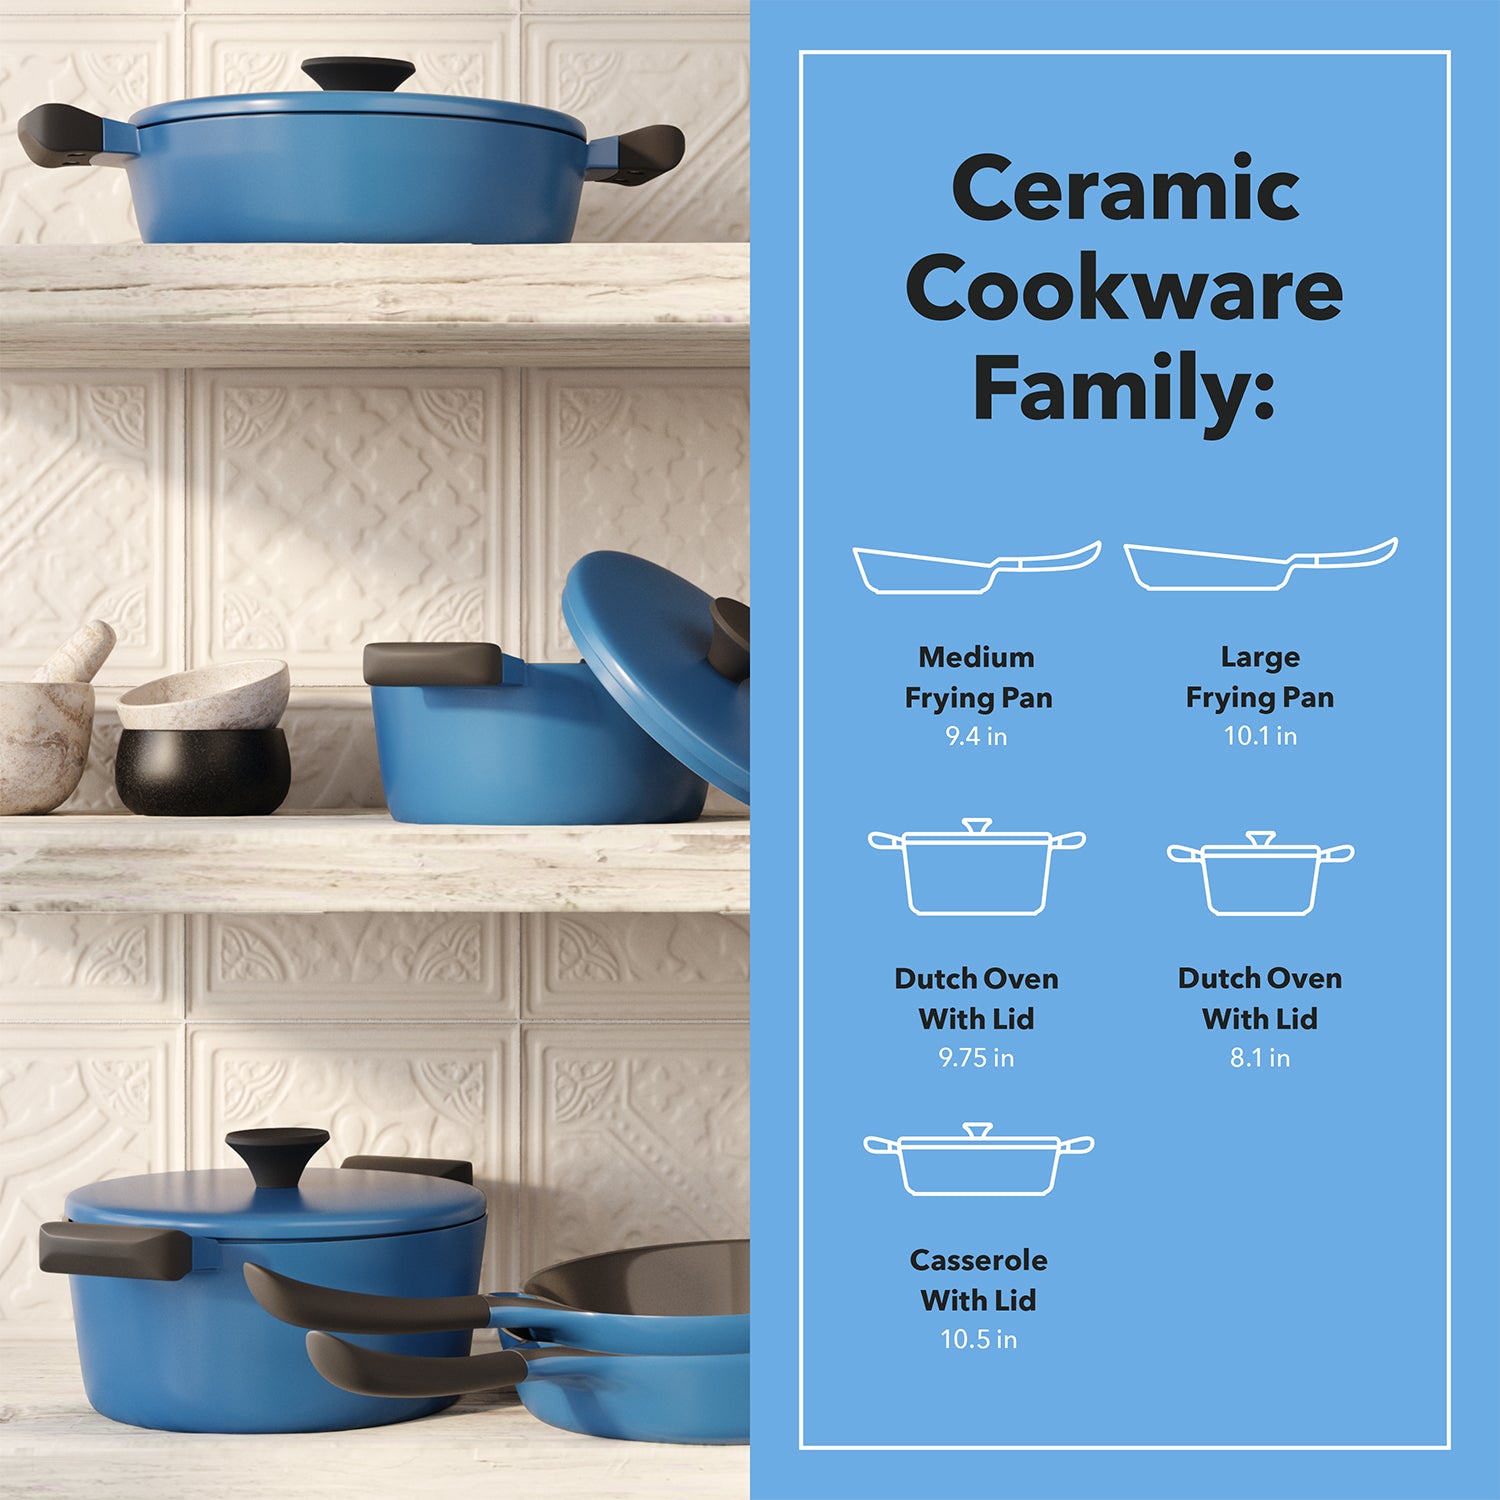 Masterpiece Dinner Ceramic Cookware Set - Blue